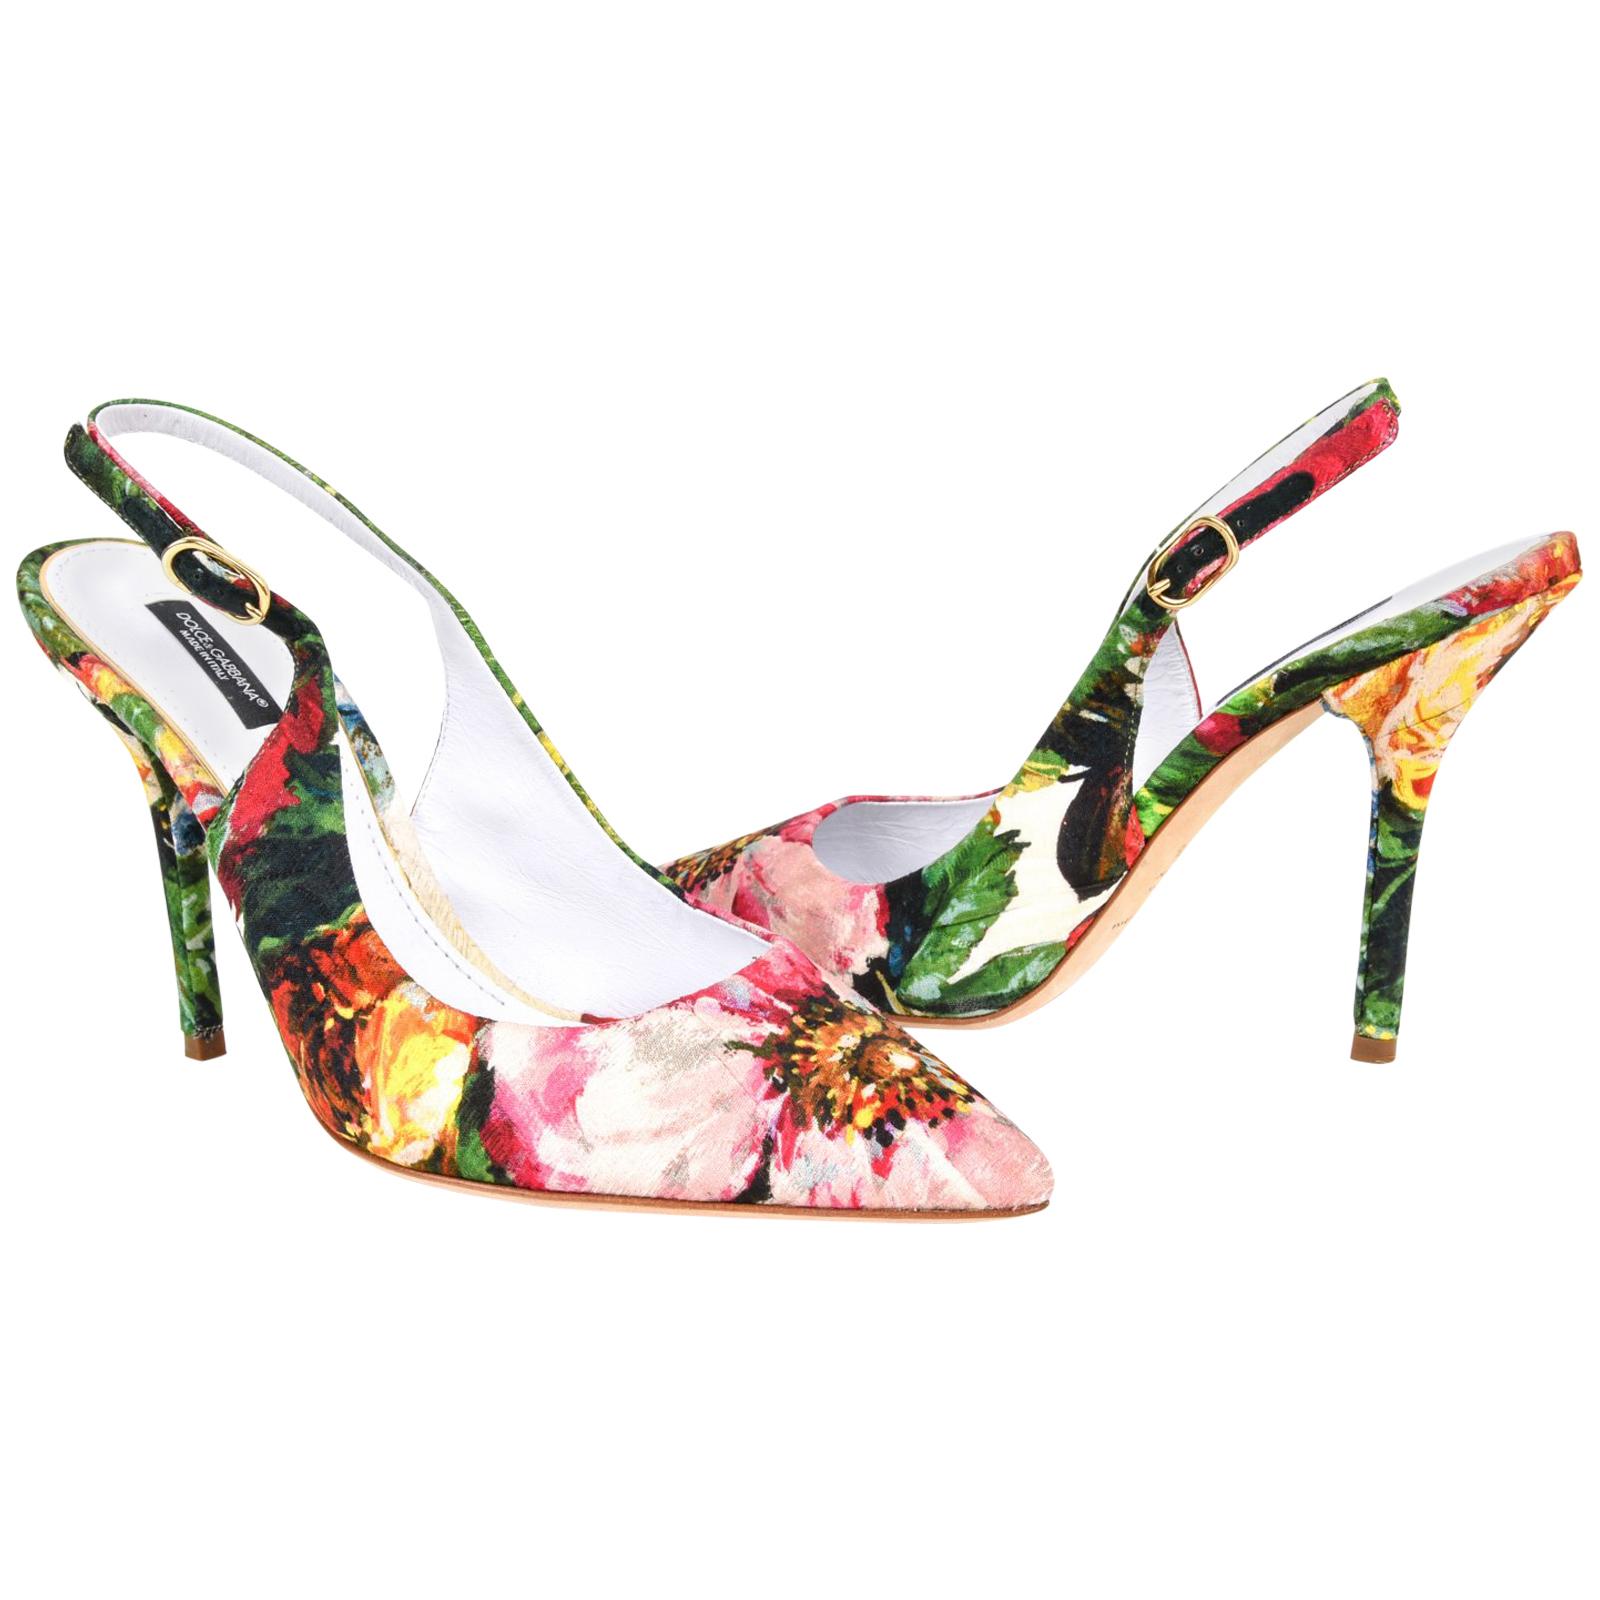 Dolce&Gabbana Shoe Exotic Flower Print on Brocade Textile Slingback 39.5 / 9.5